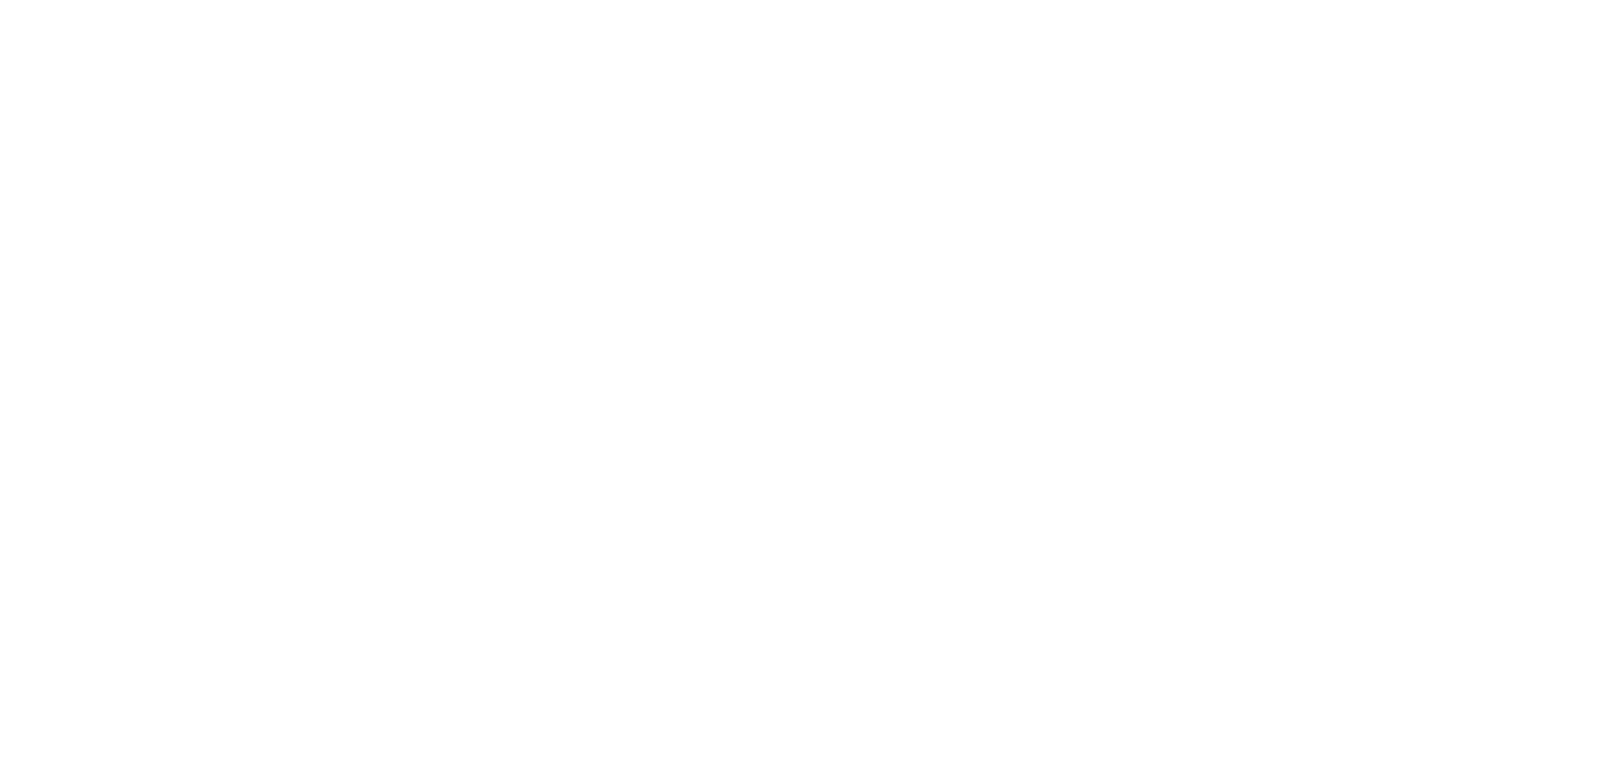 ATVsmart! logo.